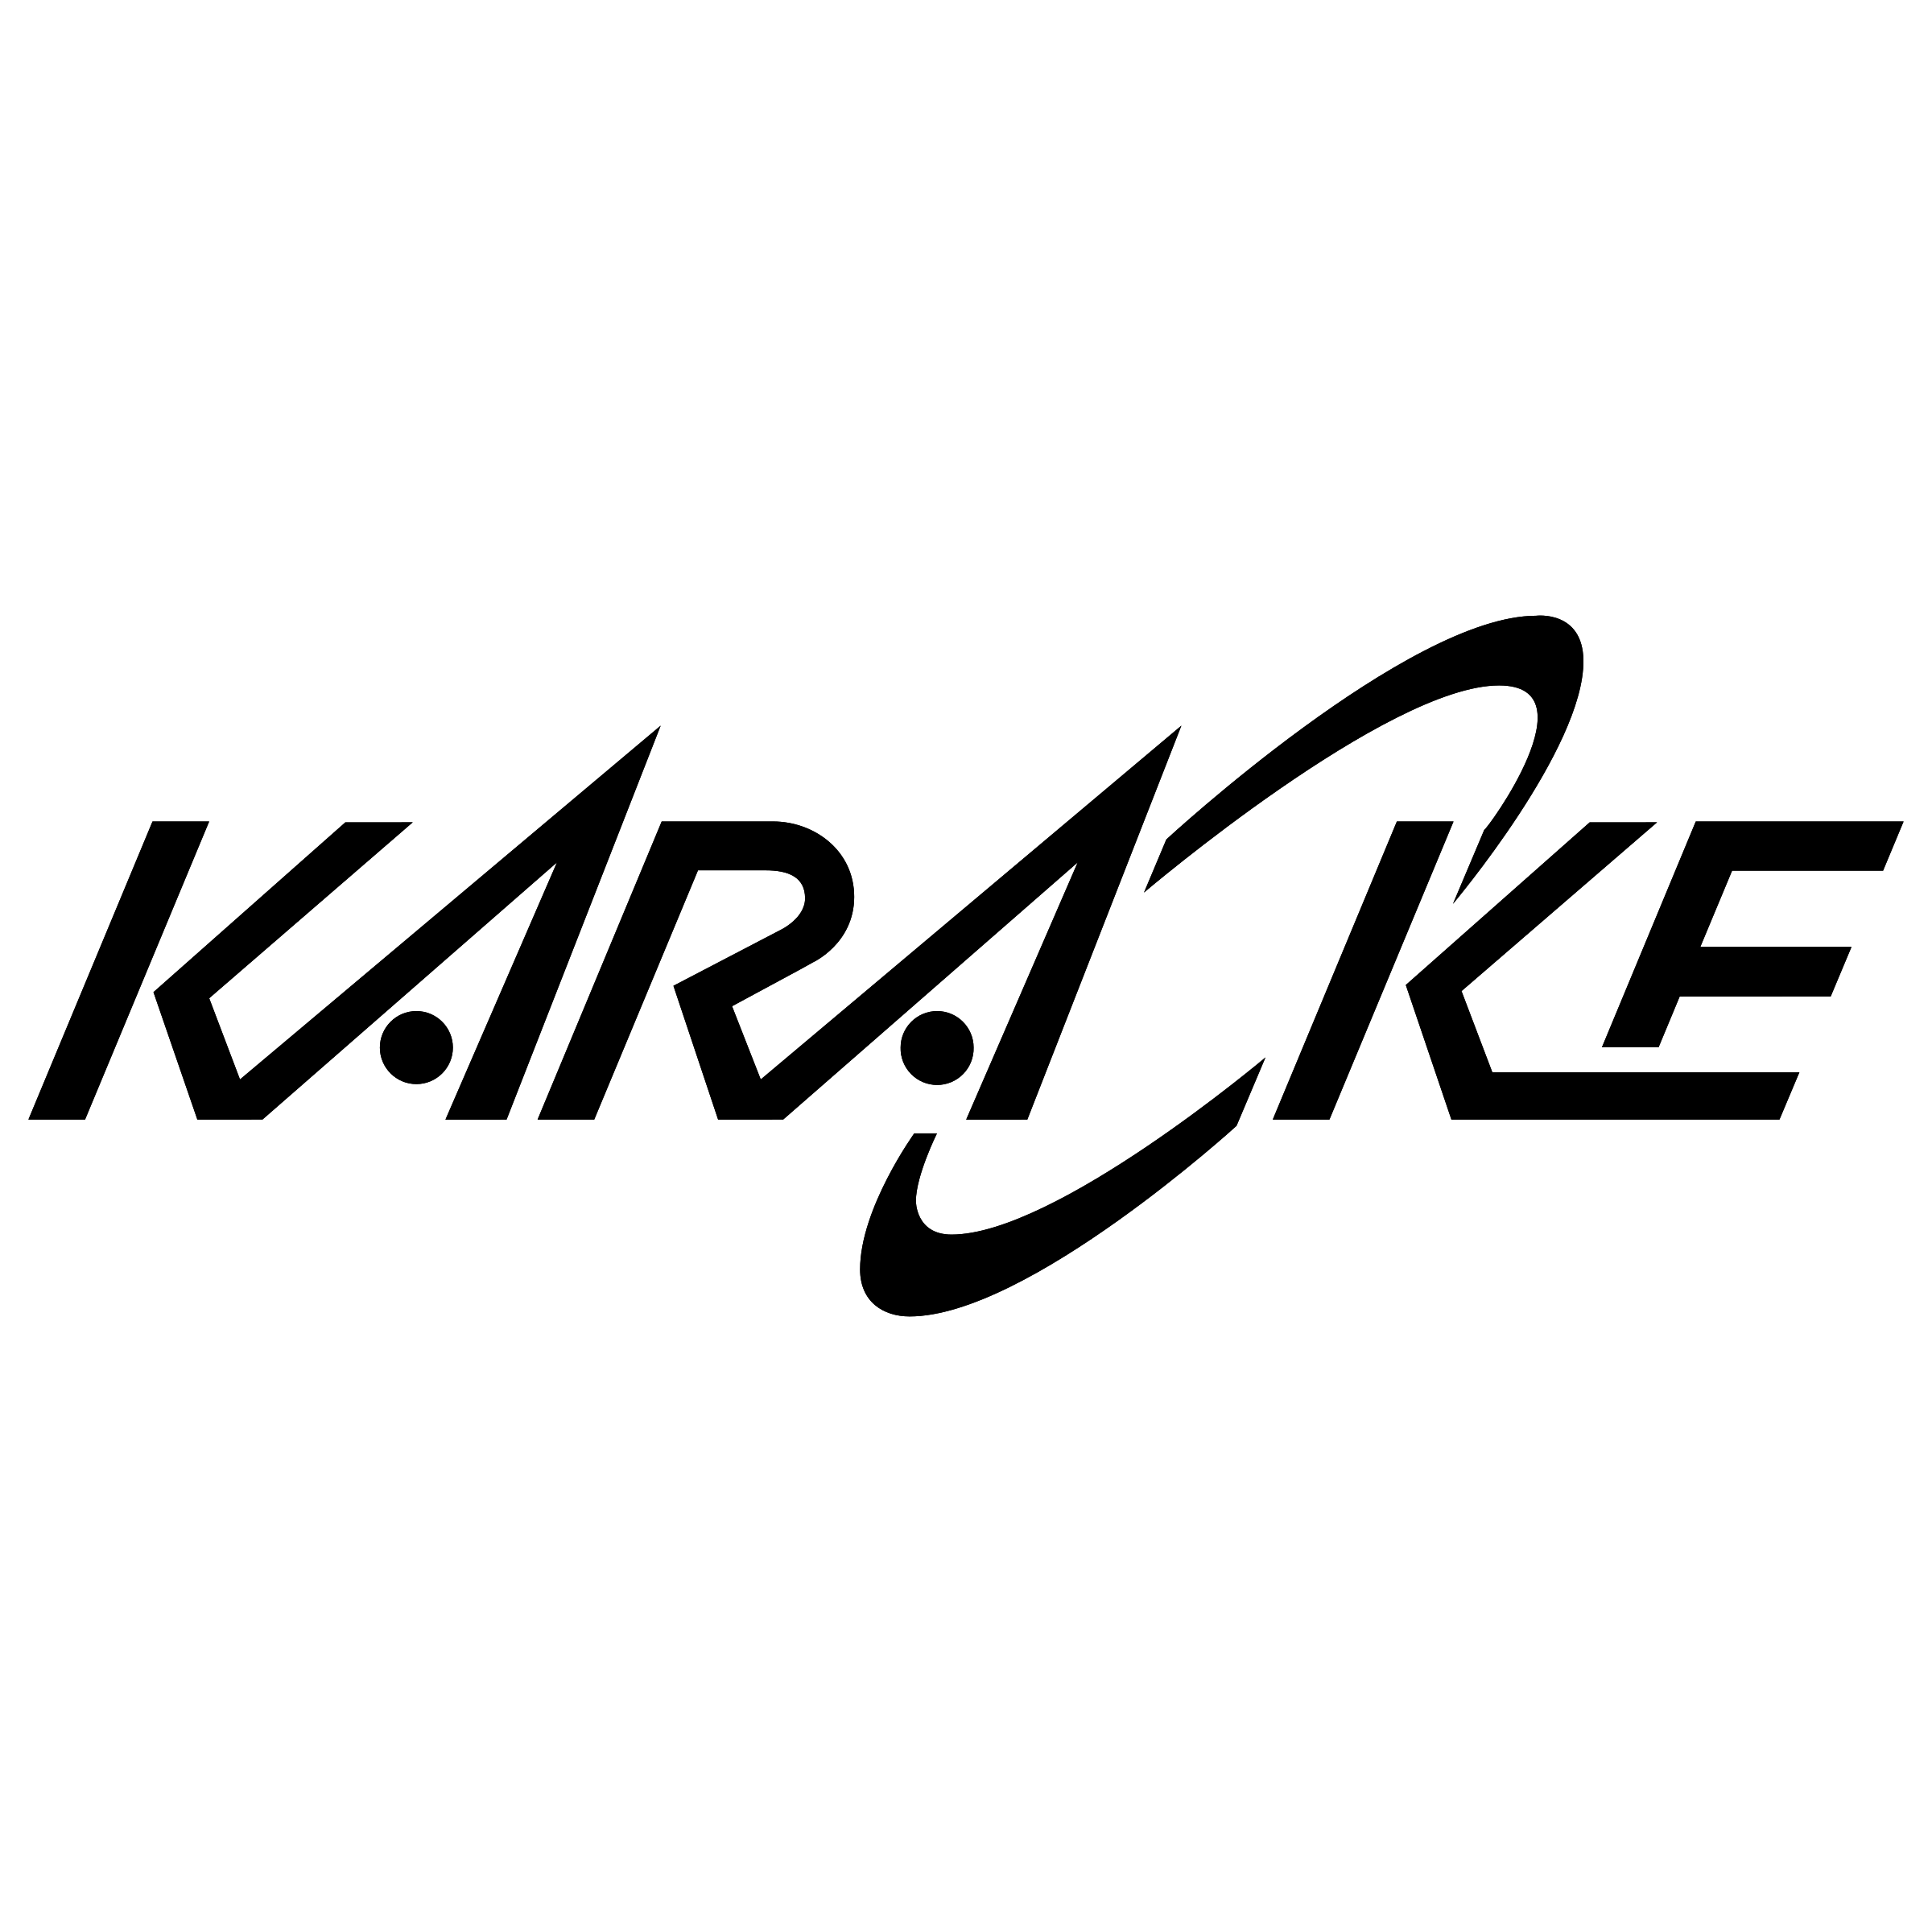 Karaoke Logo - Karaoke Logo PNG Transparent & SVG Vector